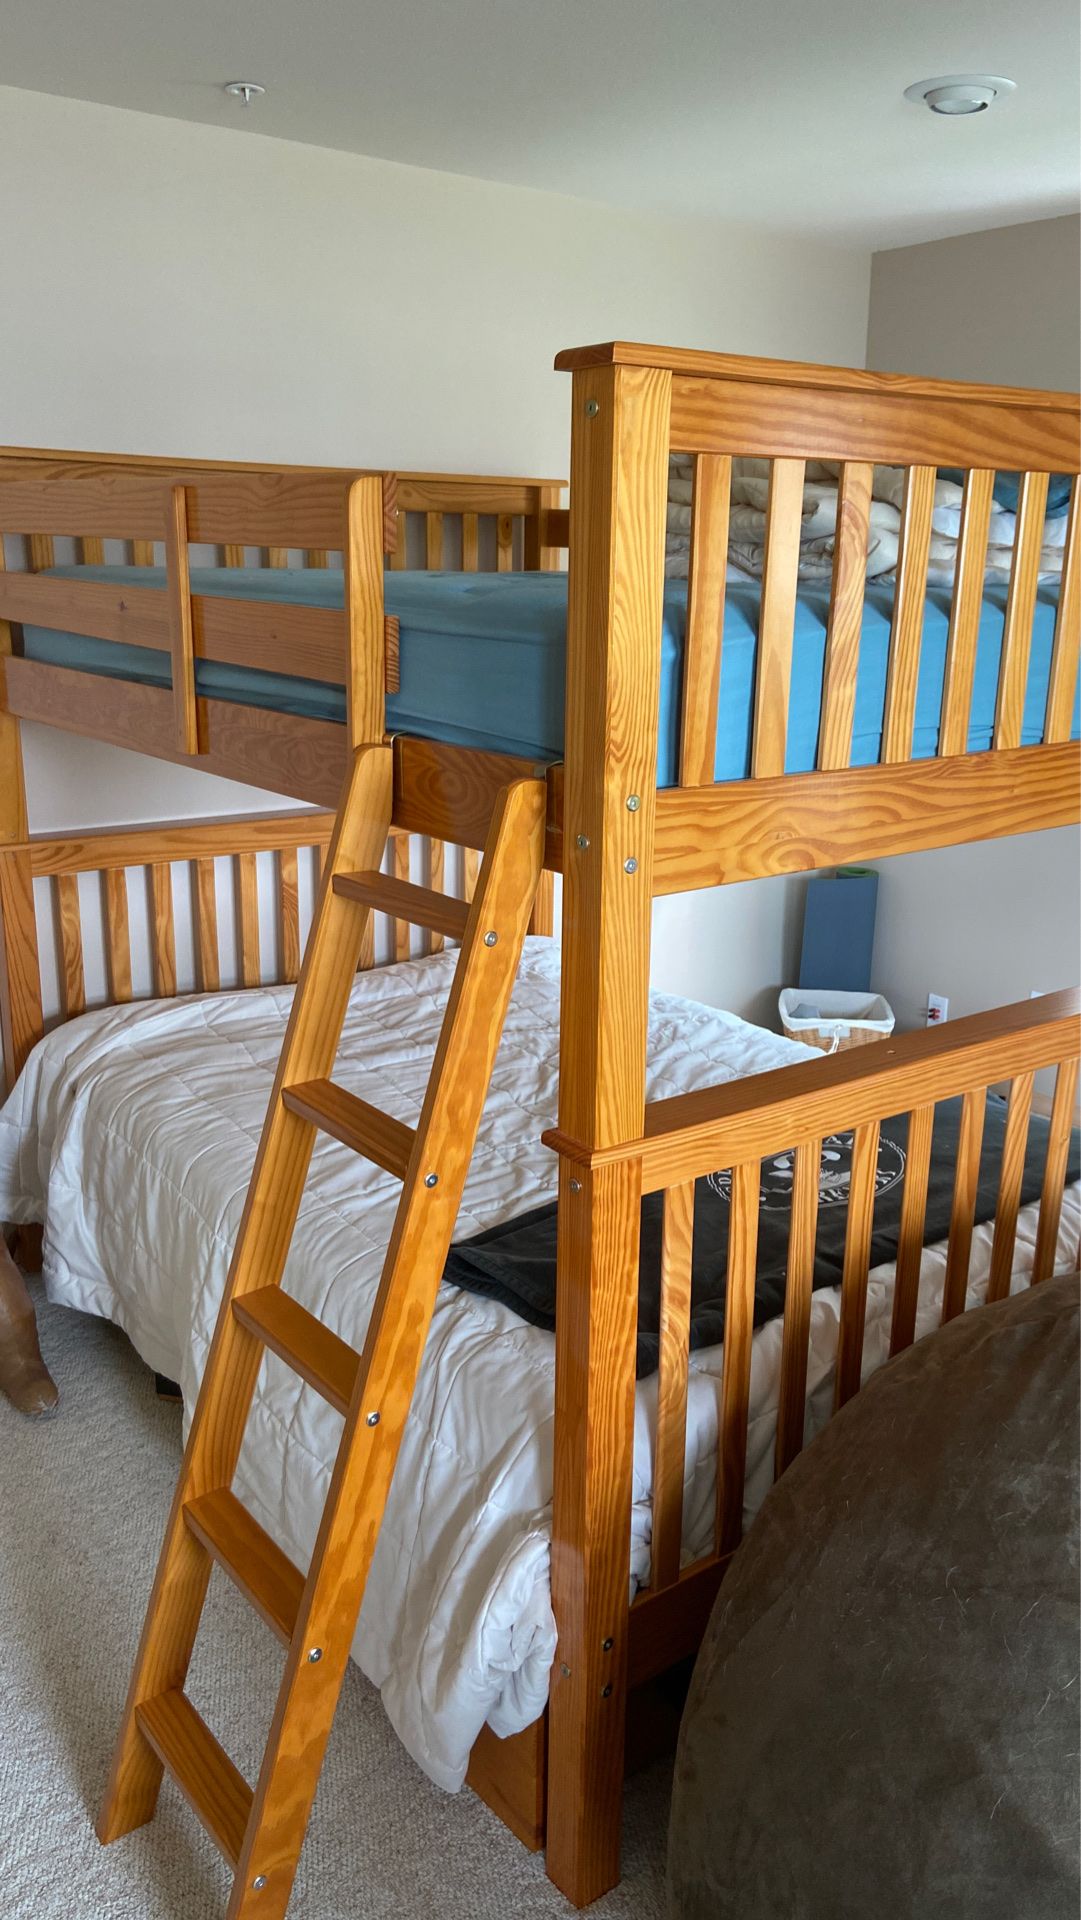 Adult size bunk beds